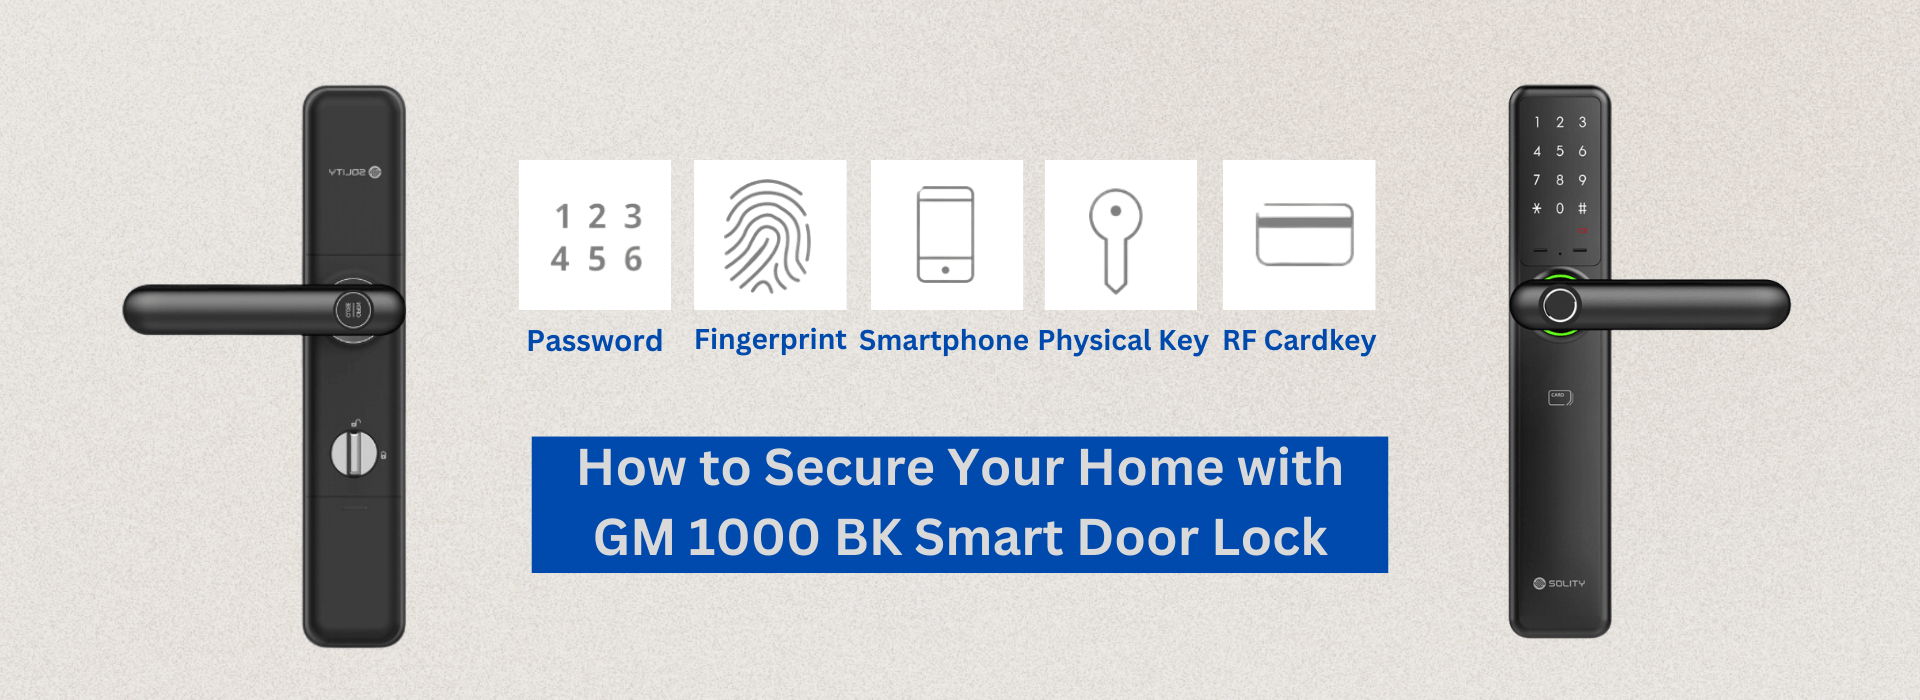 How to Secure Your Home with GM 1000 BK Smart Door Lock